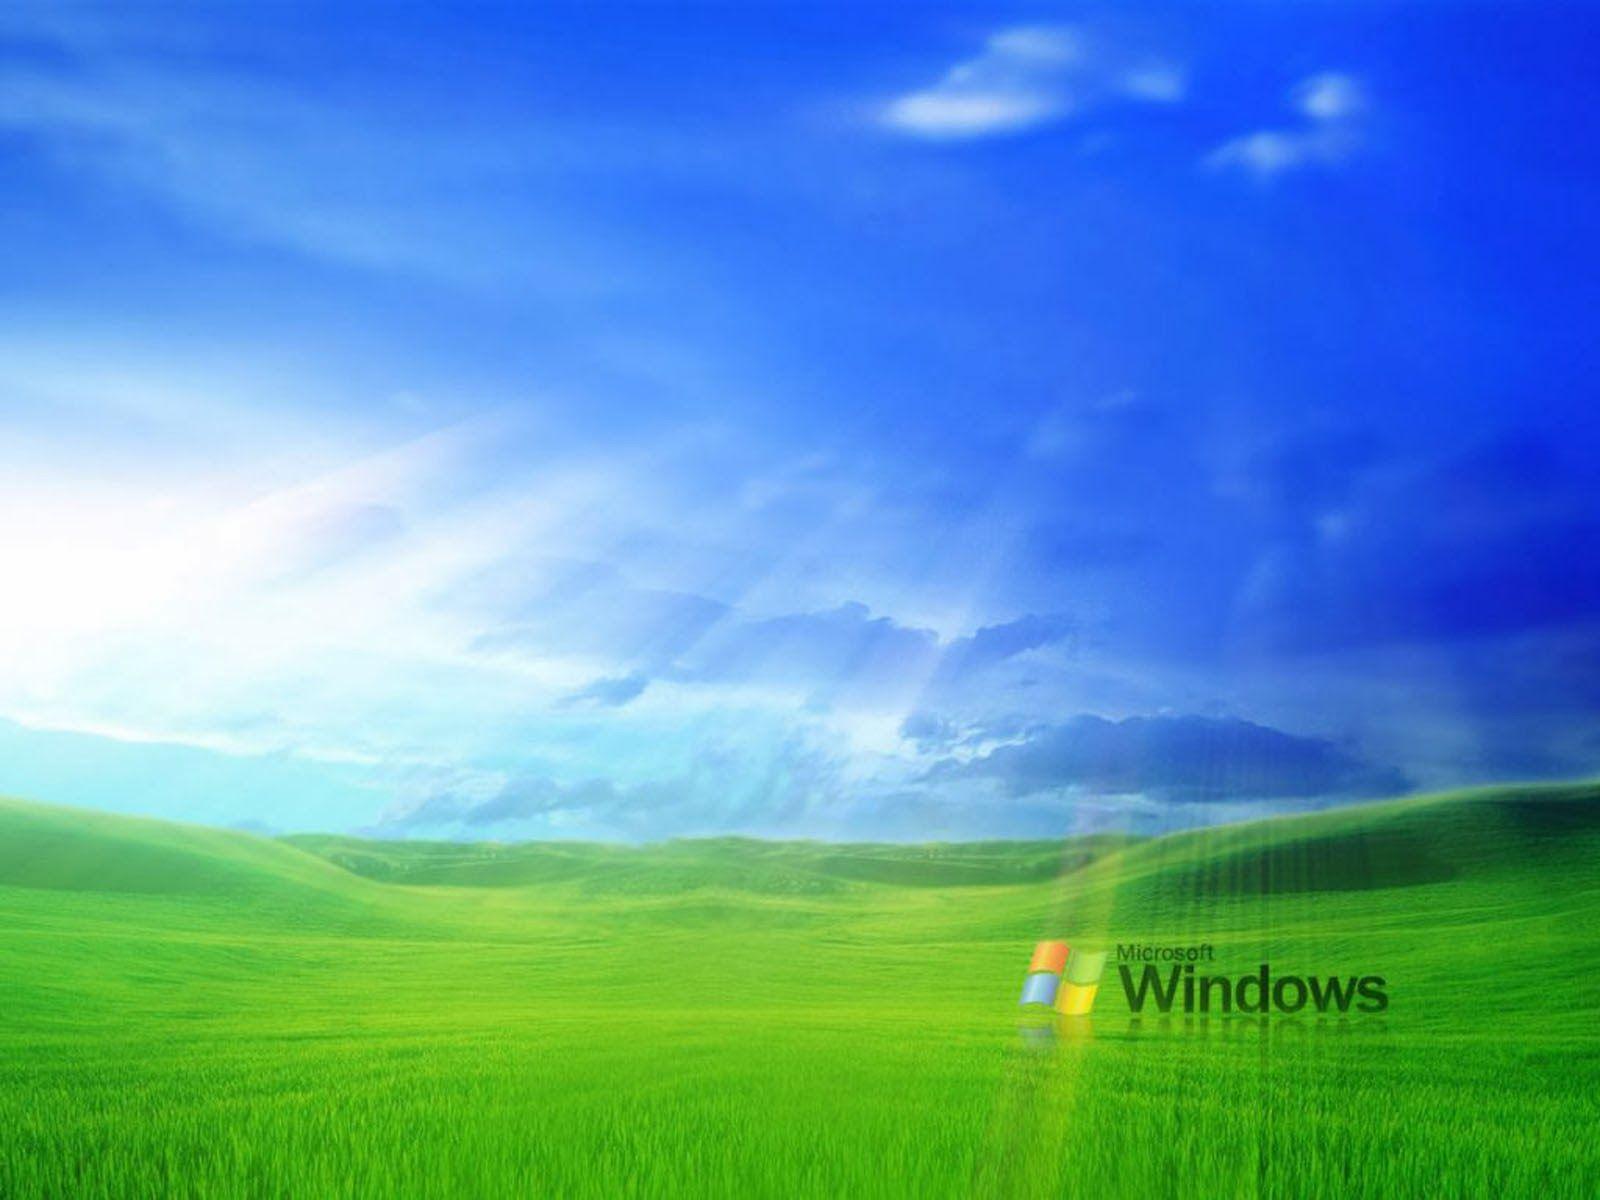 windows xp background original 5. Background Check All